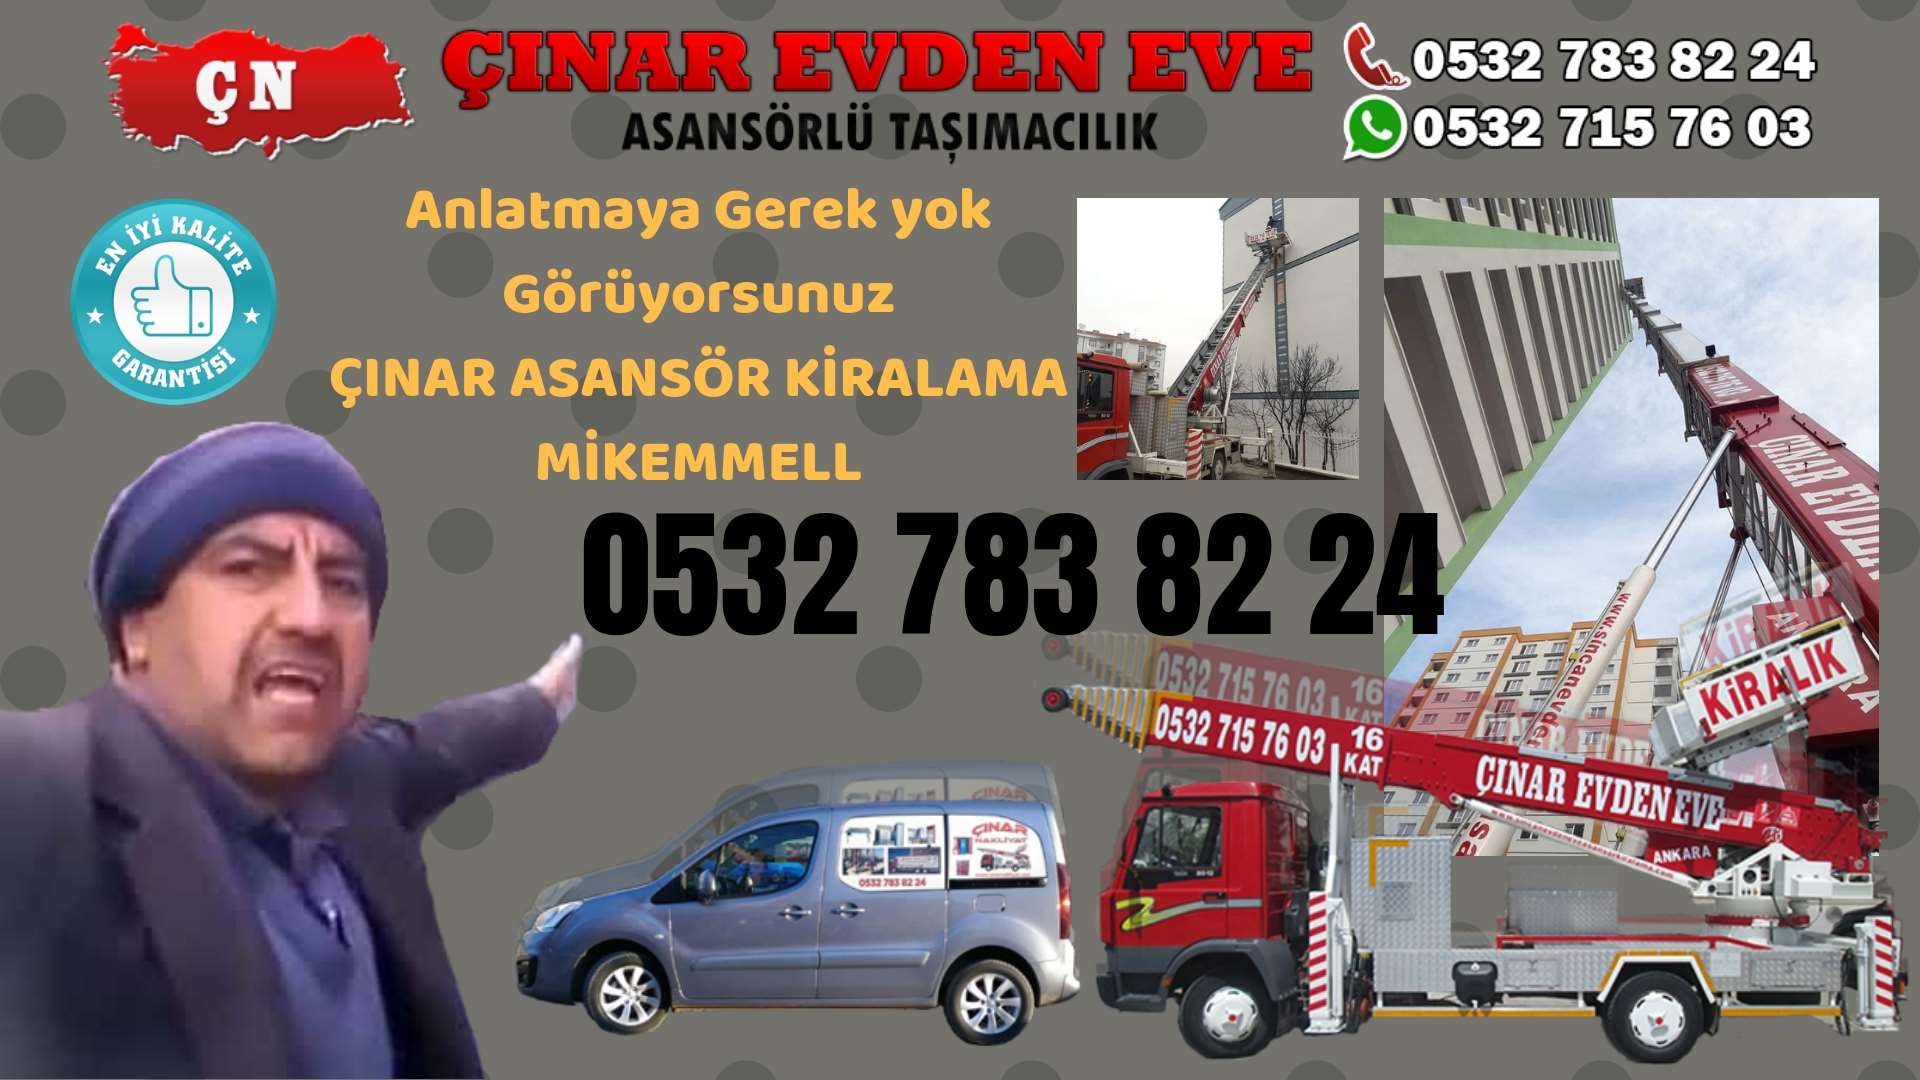 Ankara Akyurt Ankara asansör kiralama hizmeti sizlere başta kalite ve maddi acıdan tasarruf 0532 715 76 03